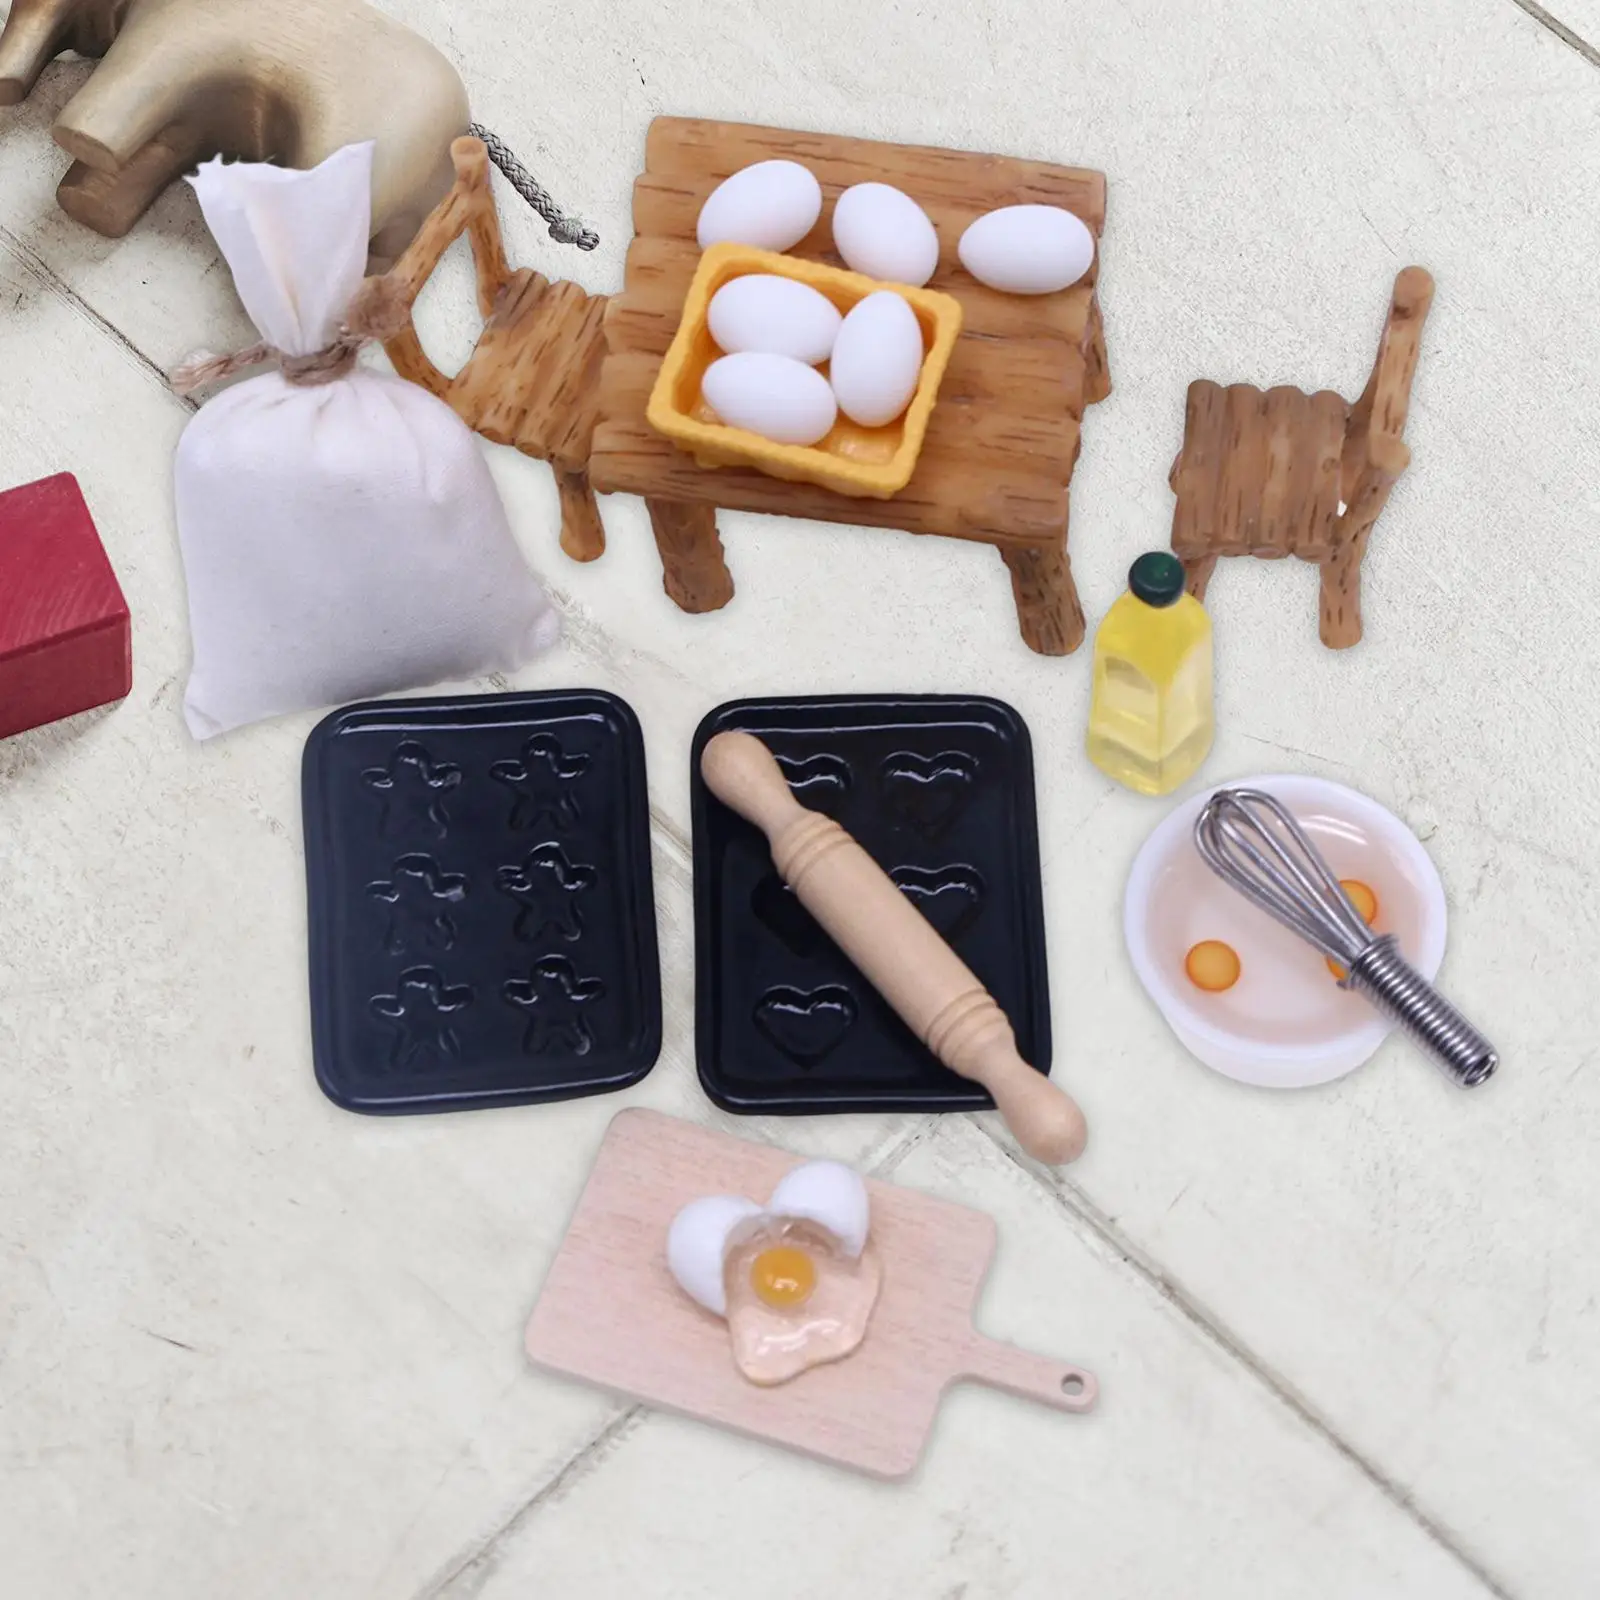 1/12 Dollhouse Miniature Rolling Pin Dollhouse Baking Supplies for DIY Model Handcraft